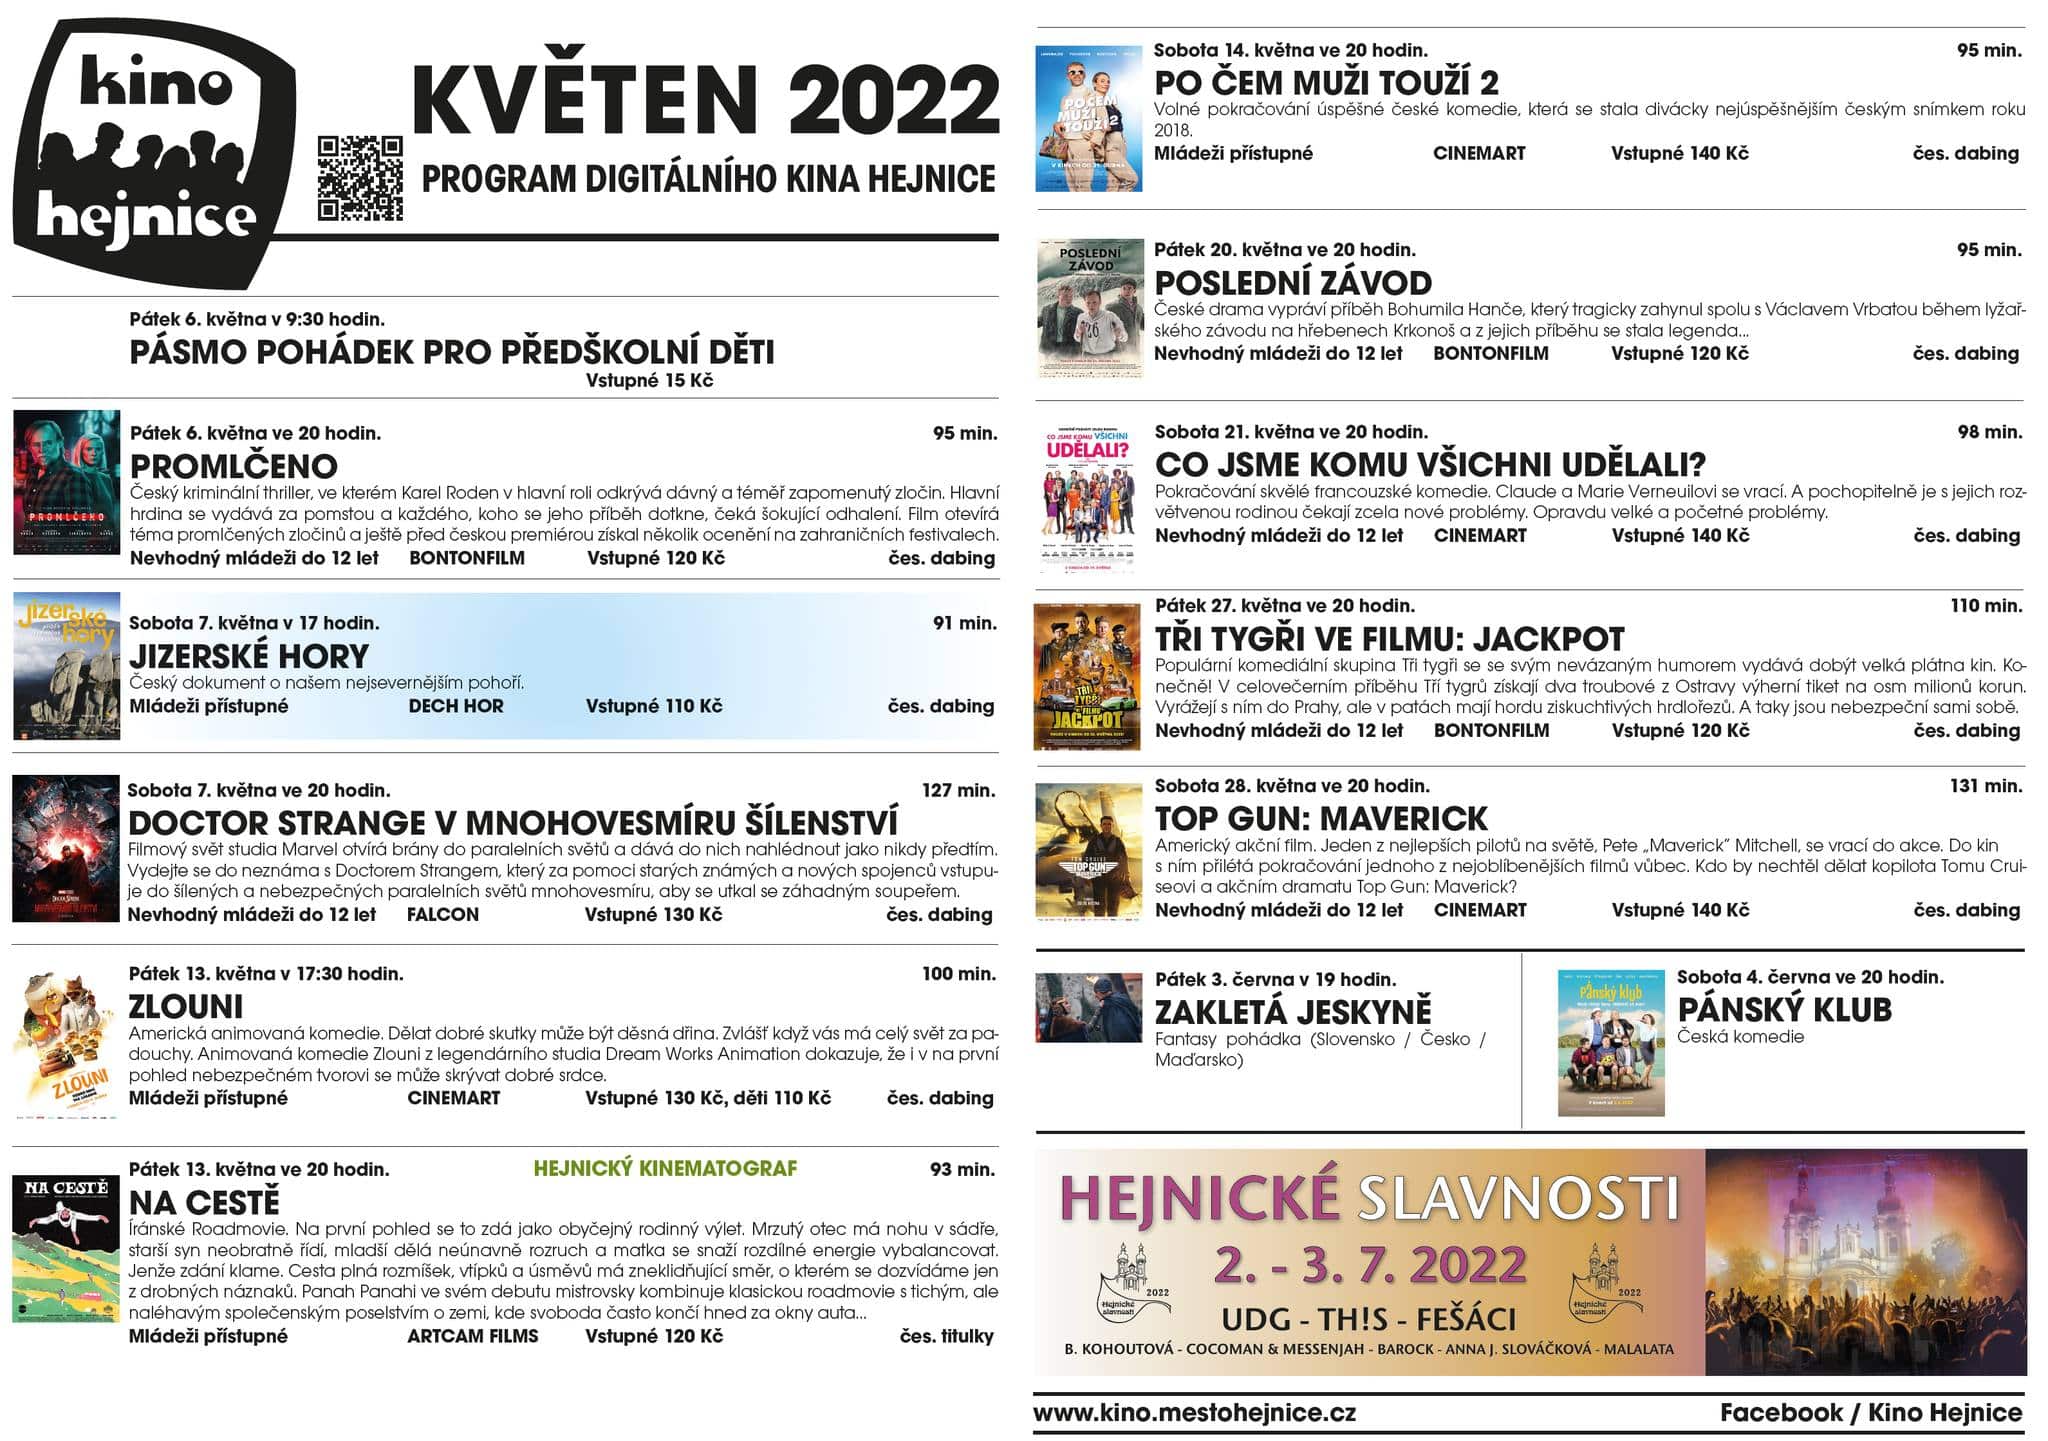 432 kino Hejnice program kveten 2022 frydlanstko